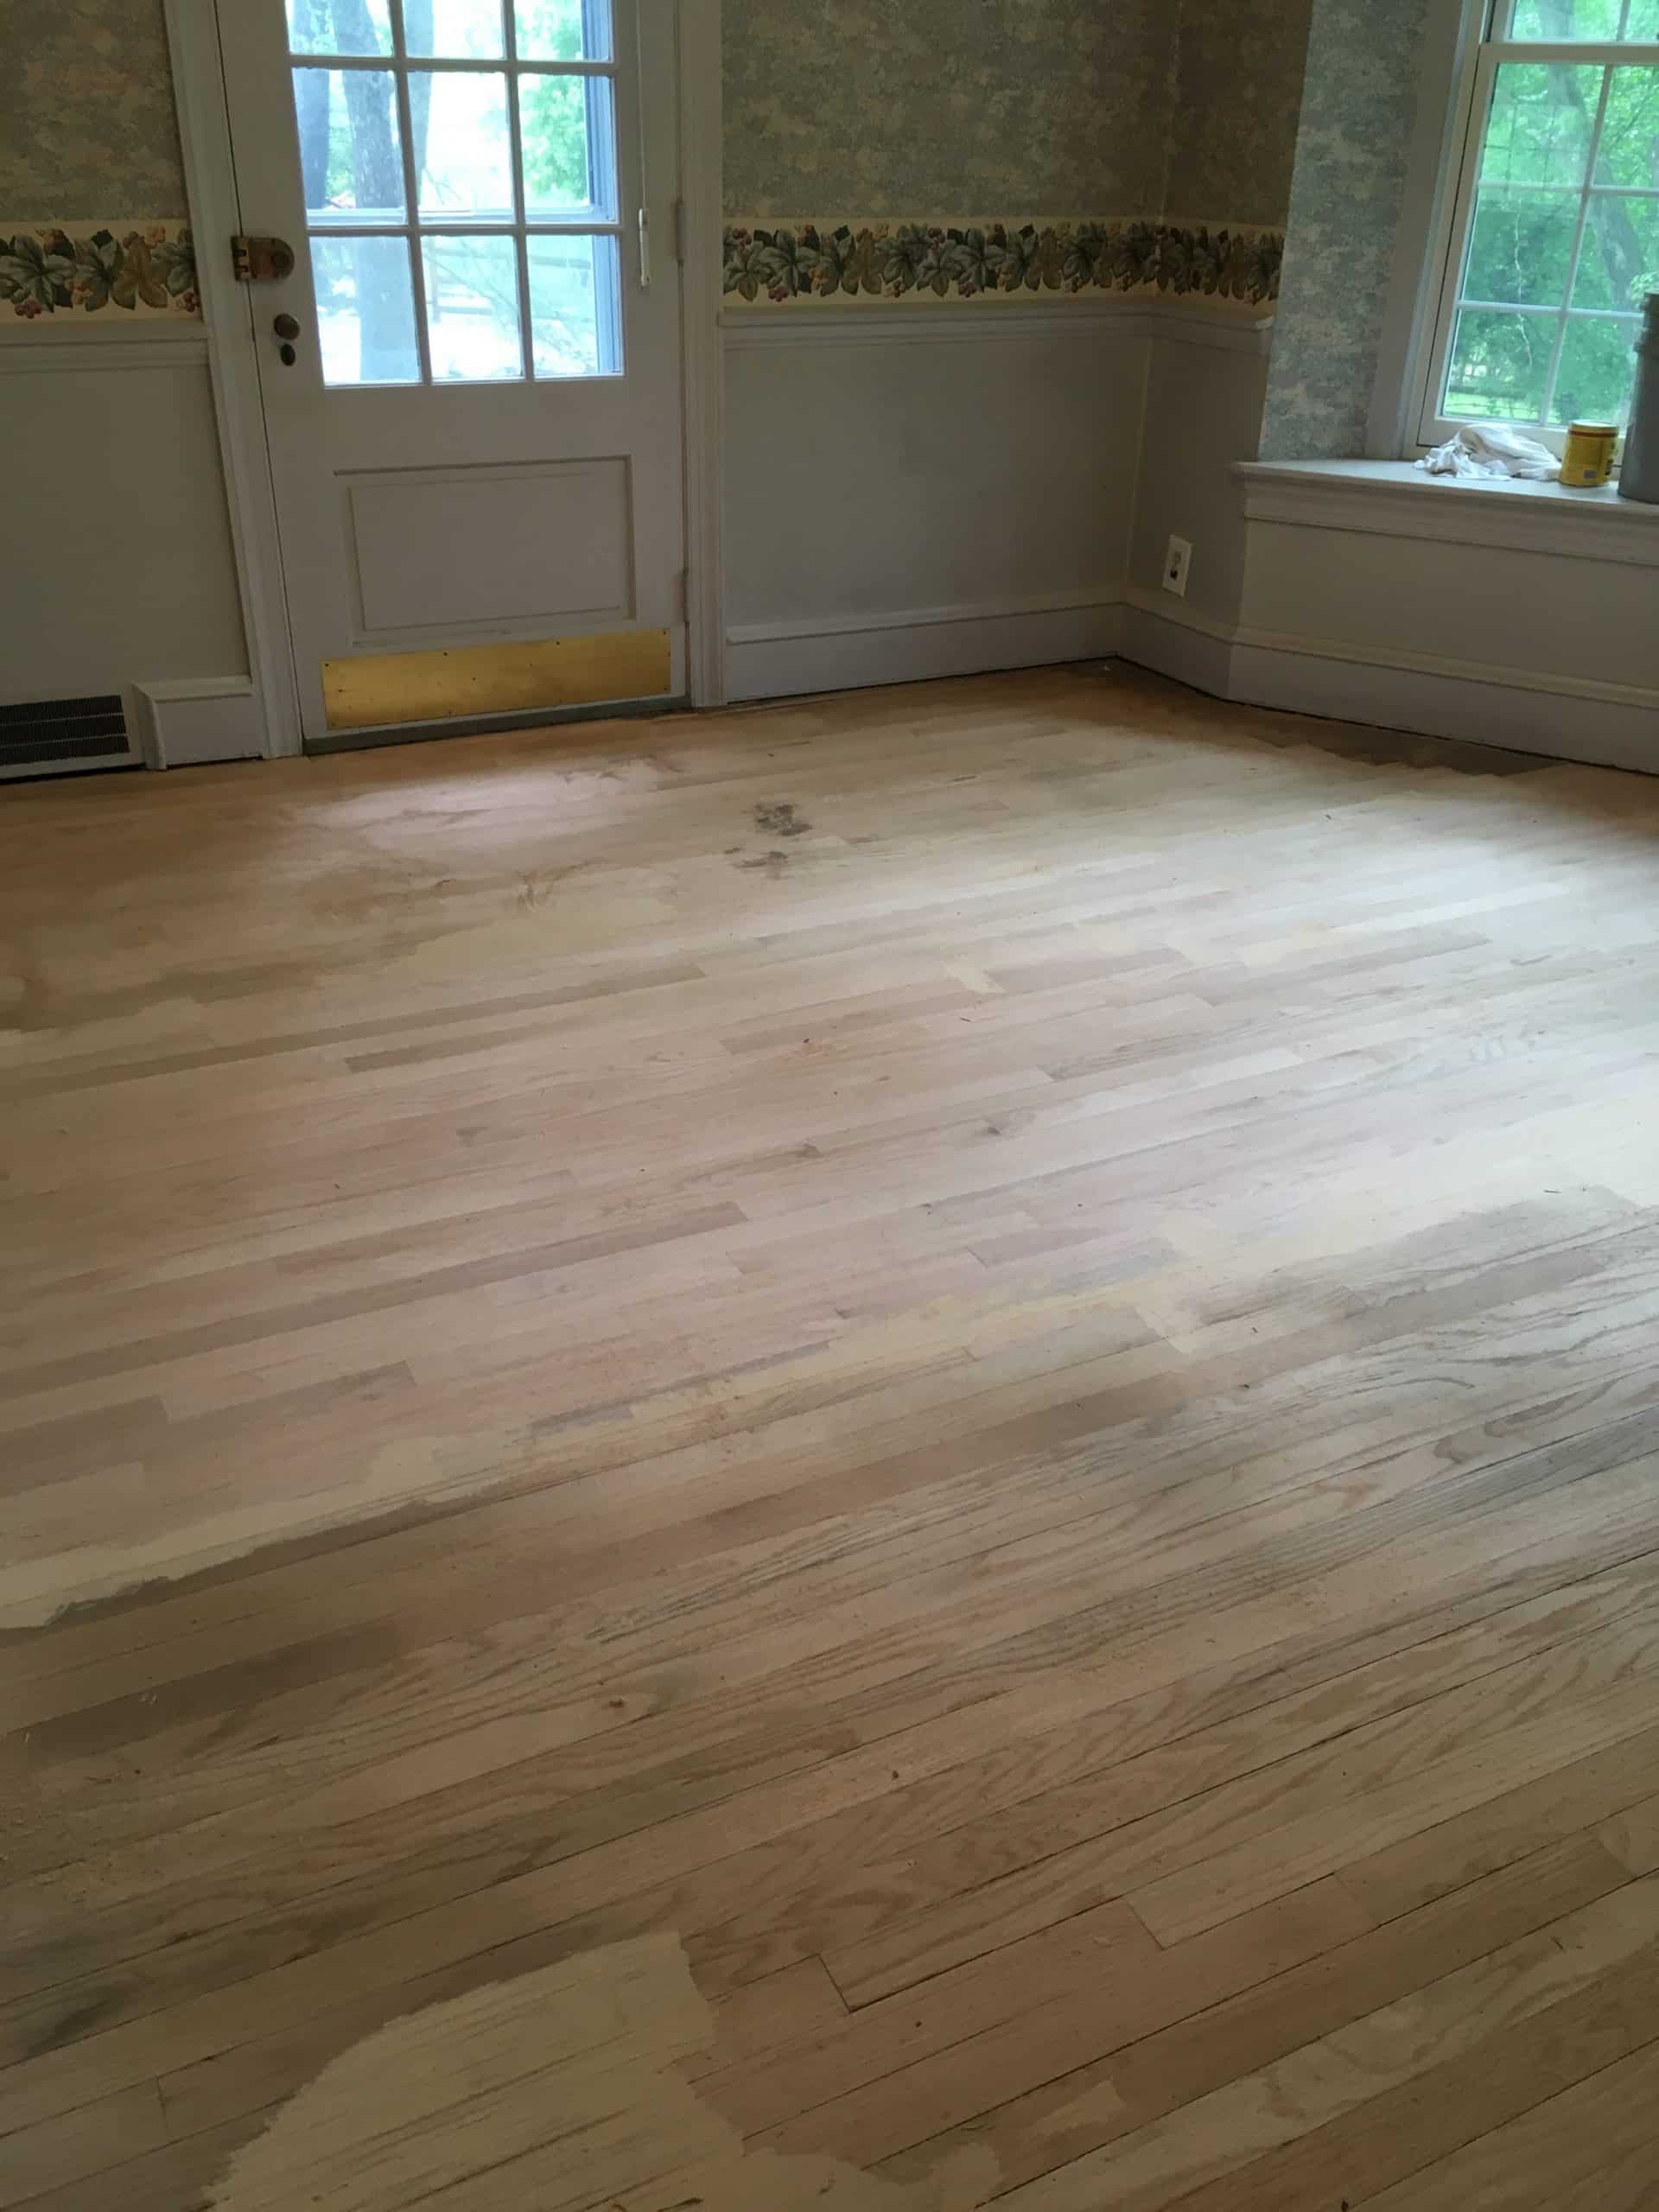 Hardwood Flooring in need of renovation